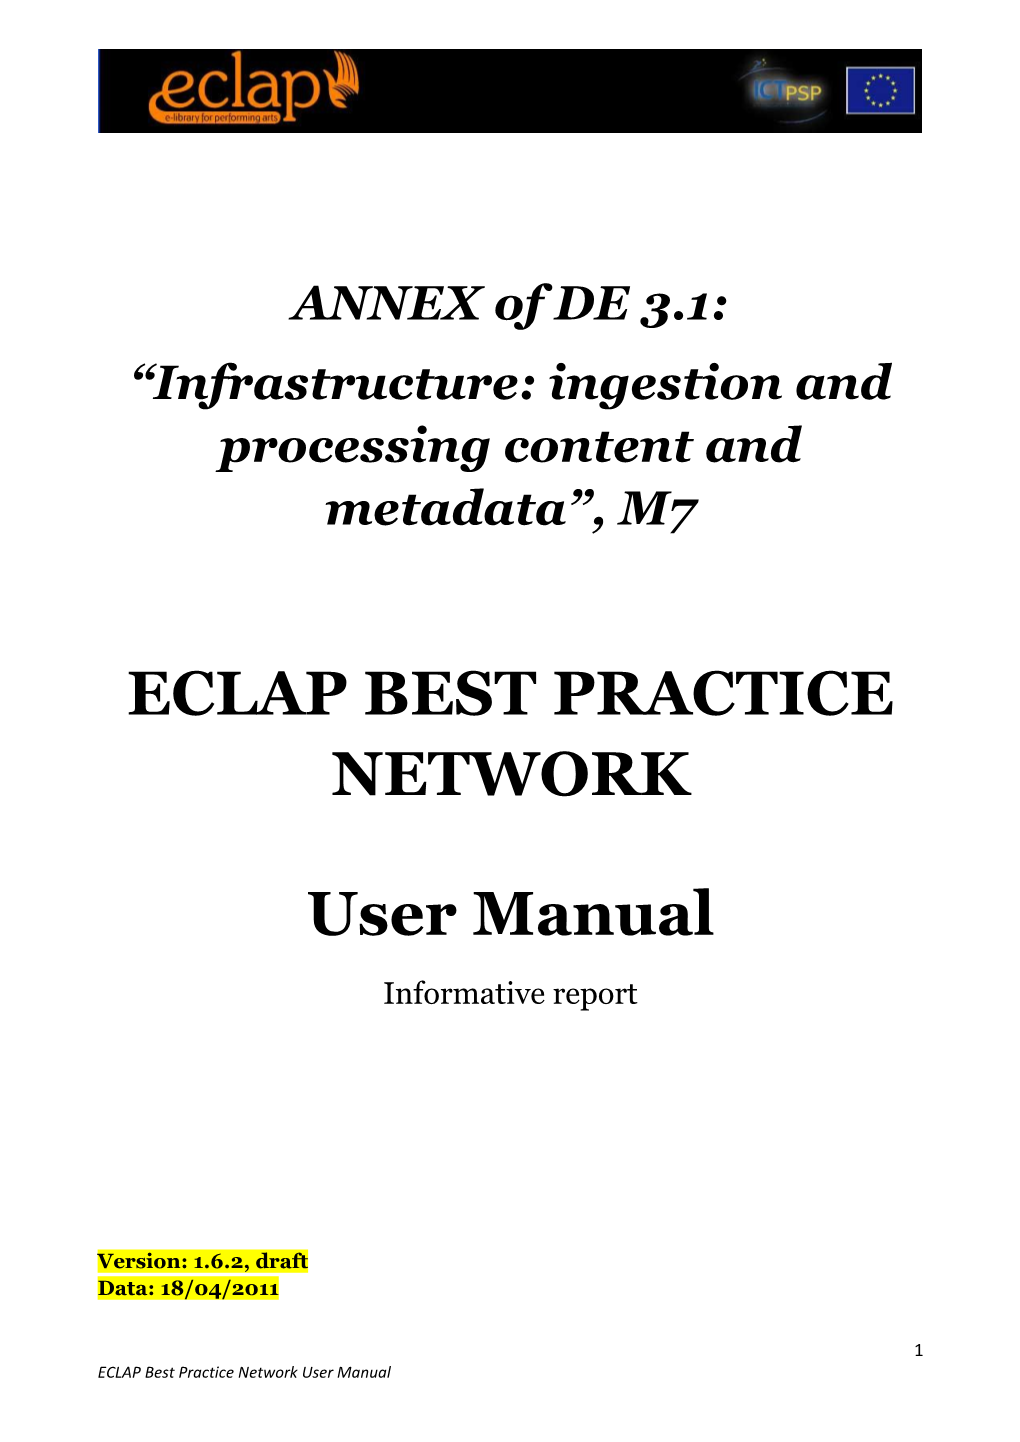 ECLAP Best Practice Network User Manual